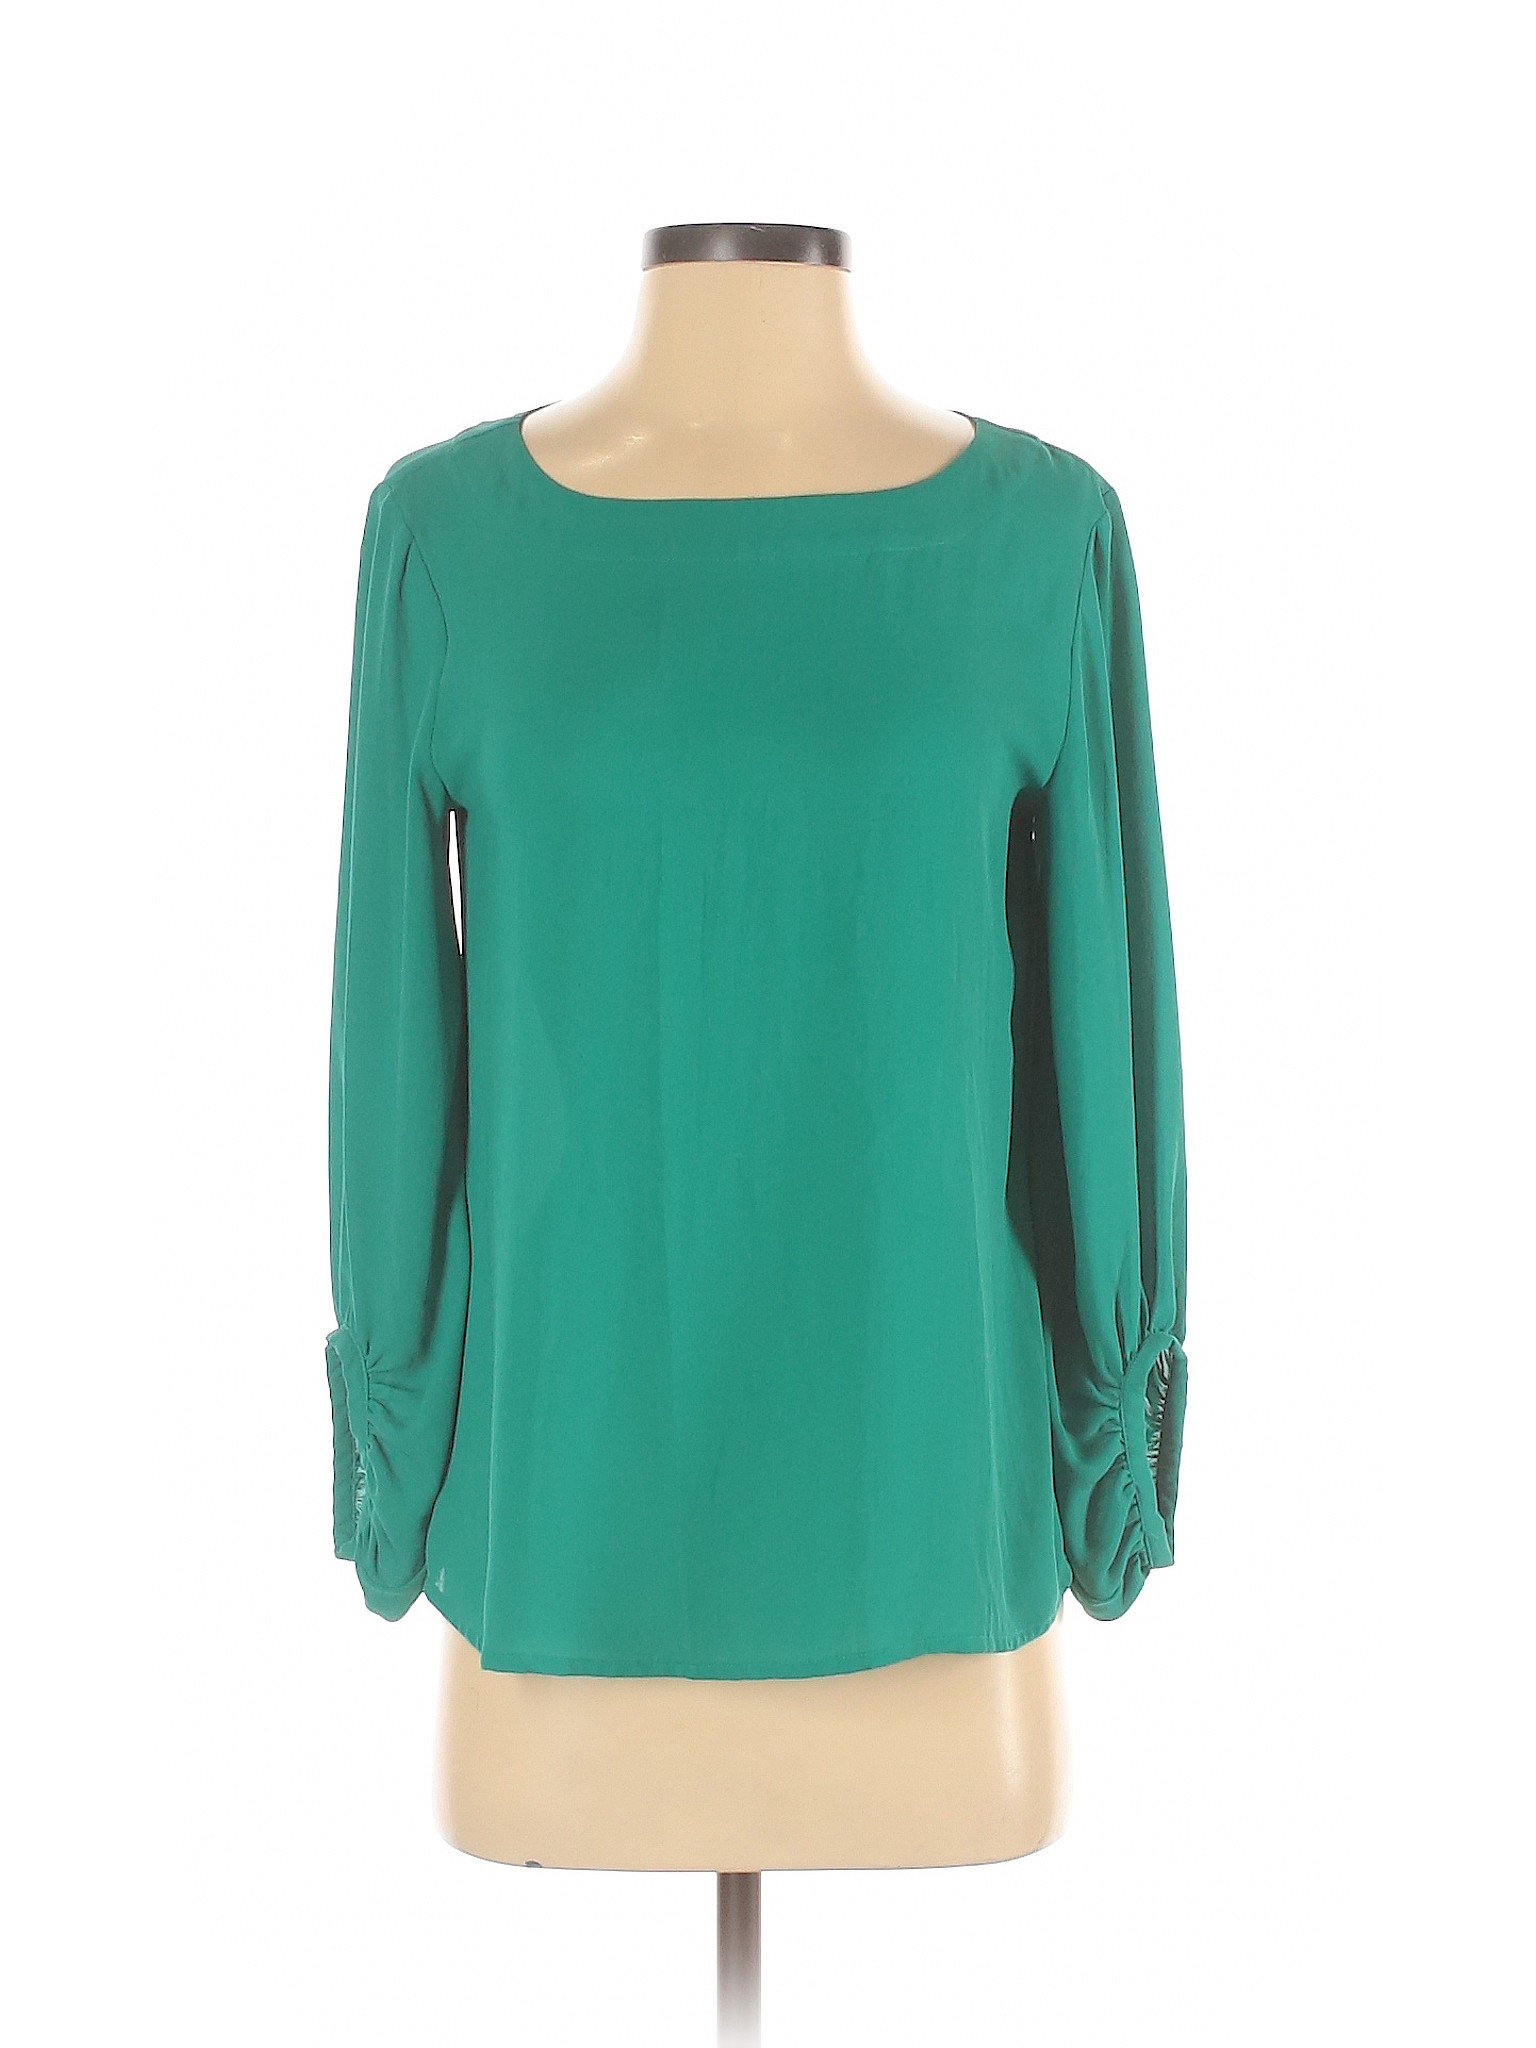 Ann Taylor LOFT Women Green Long Sleeve Blouse XS | eBay